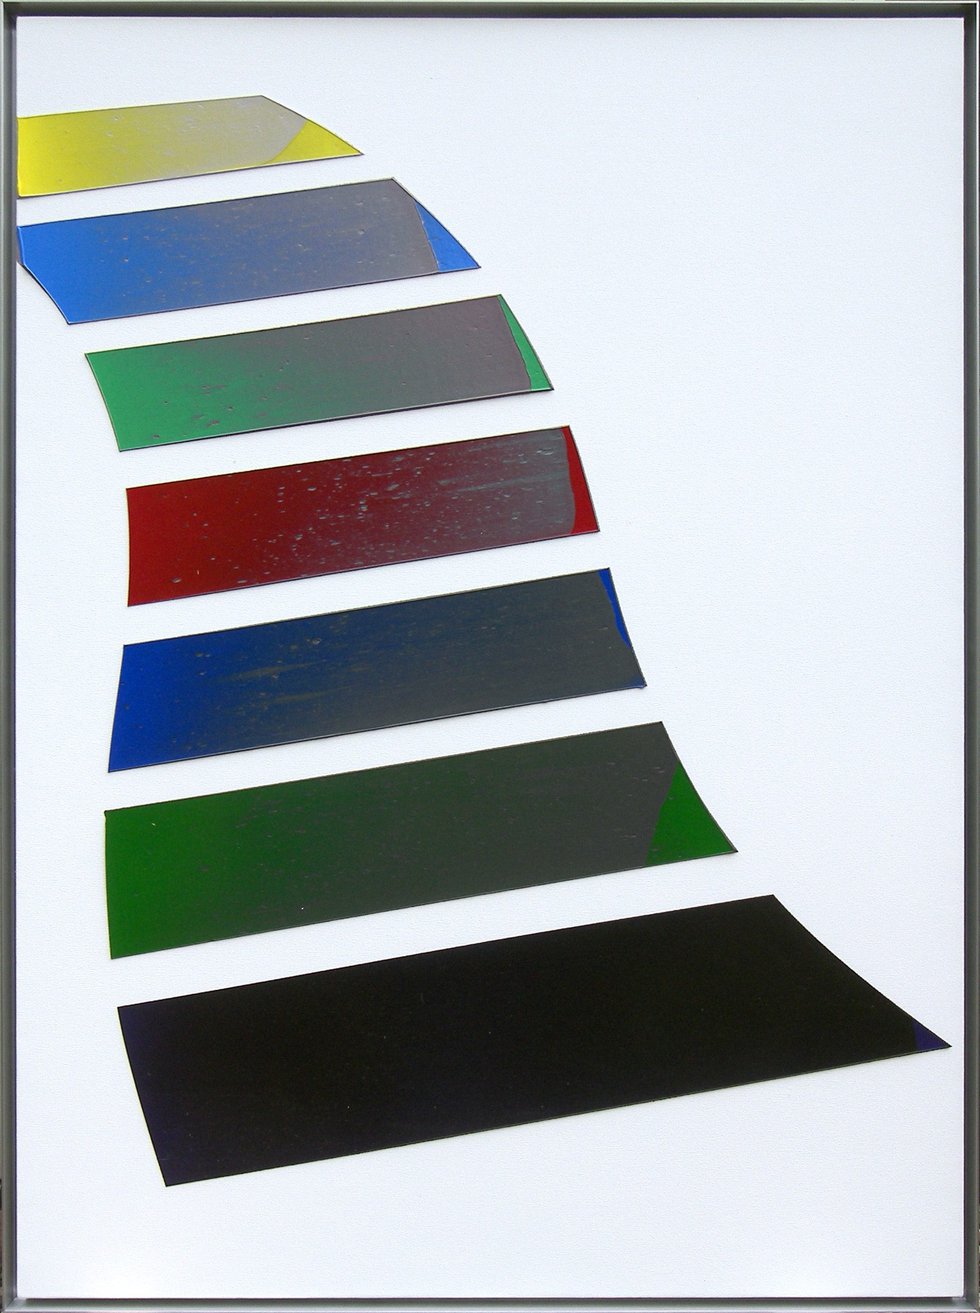 Jonathan Forrest, "Seven Step," 2015, Acrylic on canvas, 66” x 48”